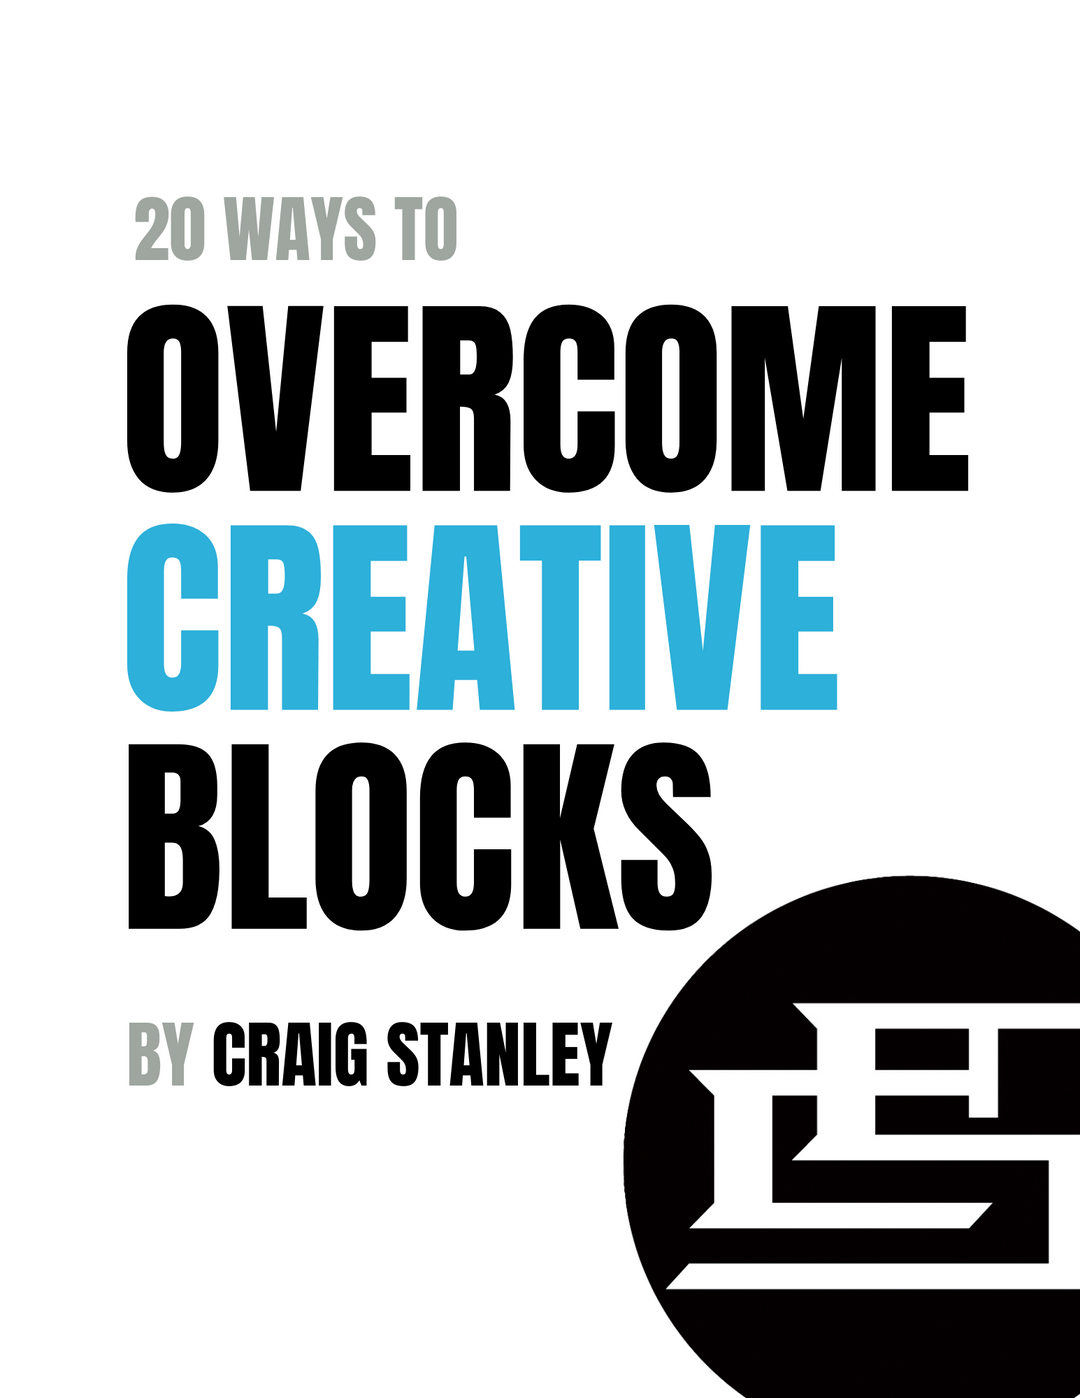 FREE-20 Ways to Overcome Creative Blocks -PDF Guide